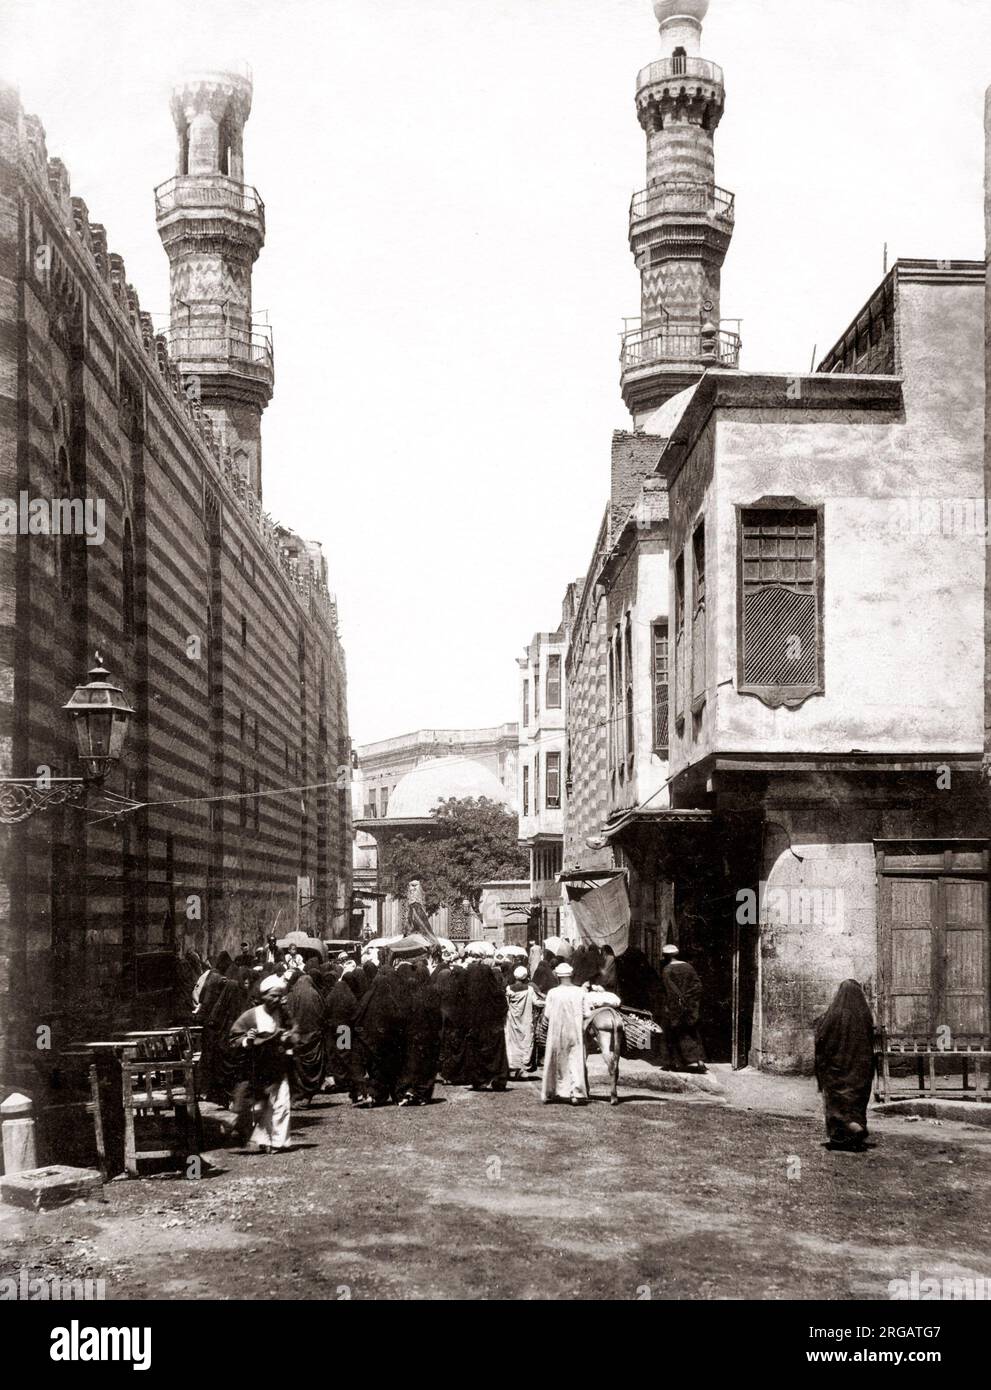 Arabische Trauerzug, Kairo, Ägypten, 1880 C. Stockfoto